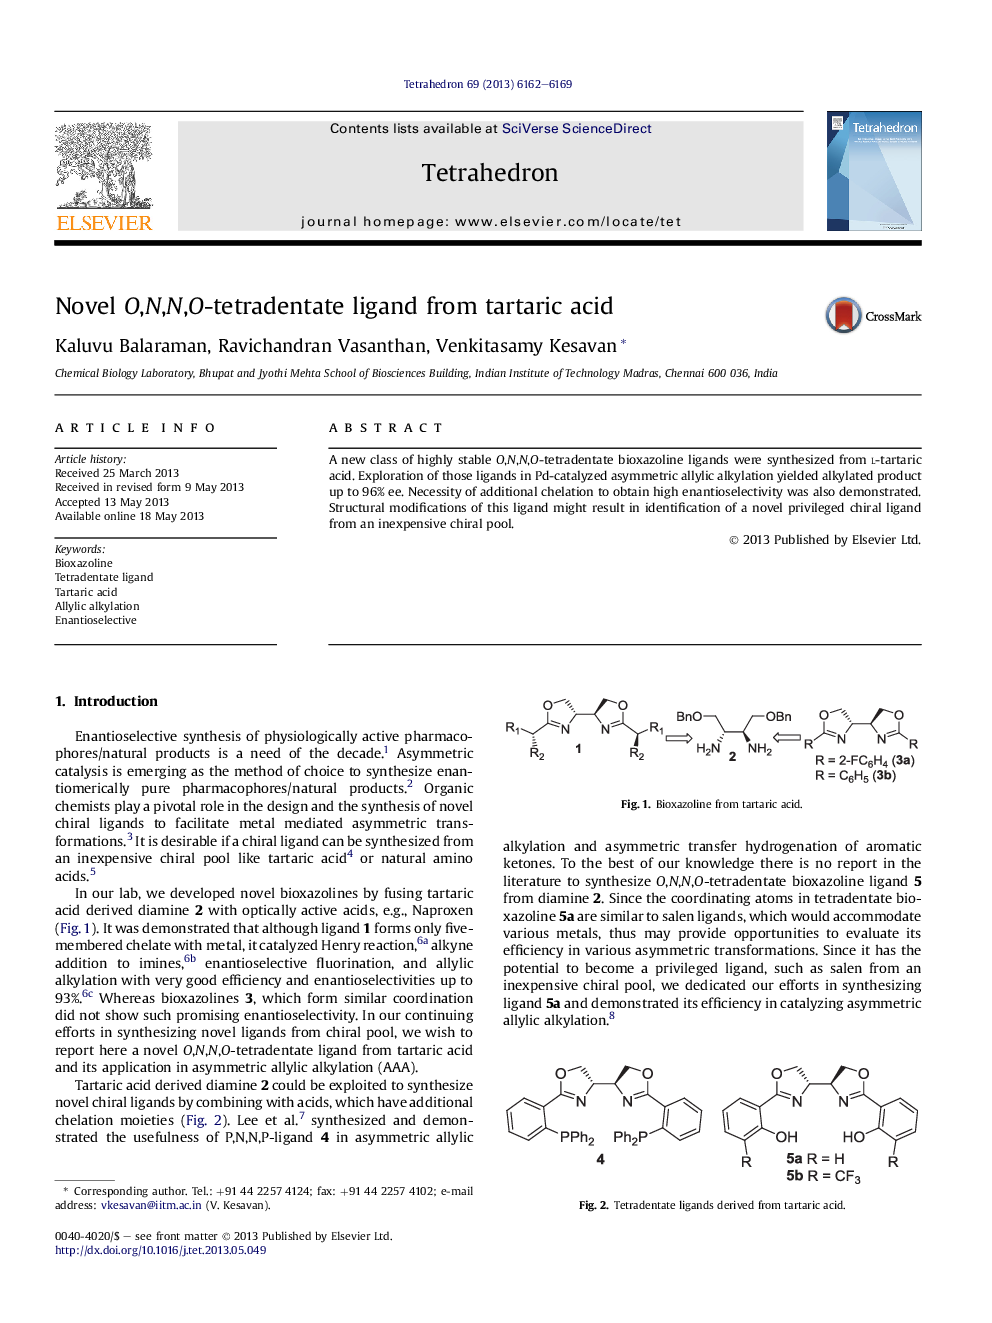 Novel O,N,N,O-tetradentate ligand from tartaric acid